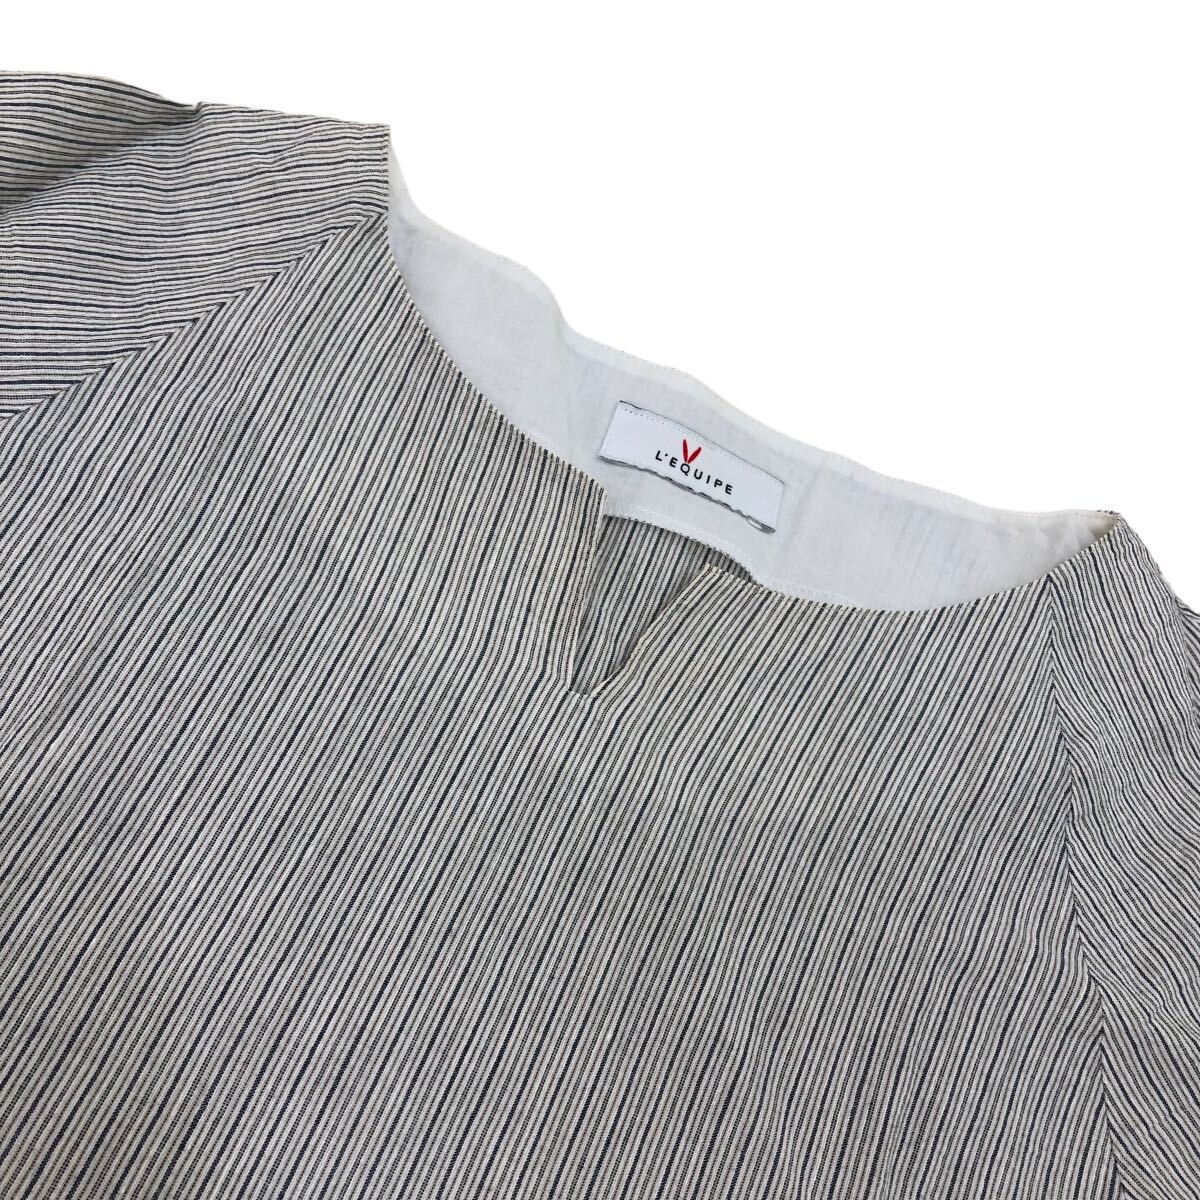 NS128① 日本製 L'EQUIPE レキップ 半袖Tシャツ トップス Tシャツ シャツ カットソー 綿混 麻混 レディース 38 ストライプ_画像2